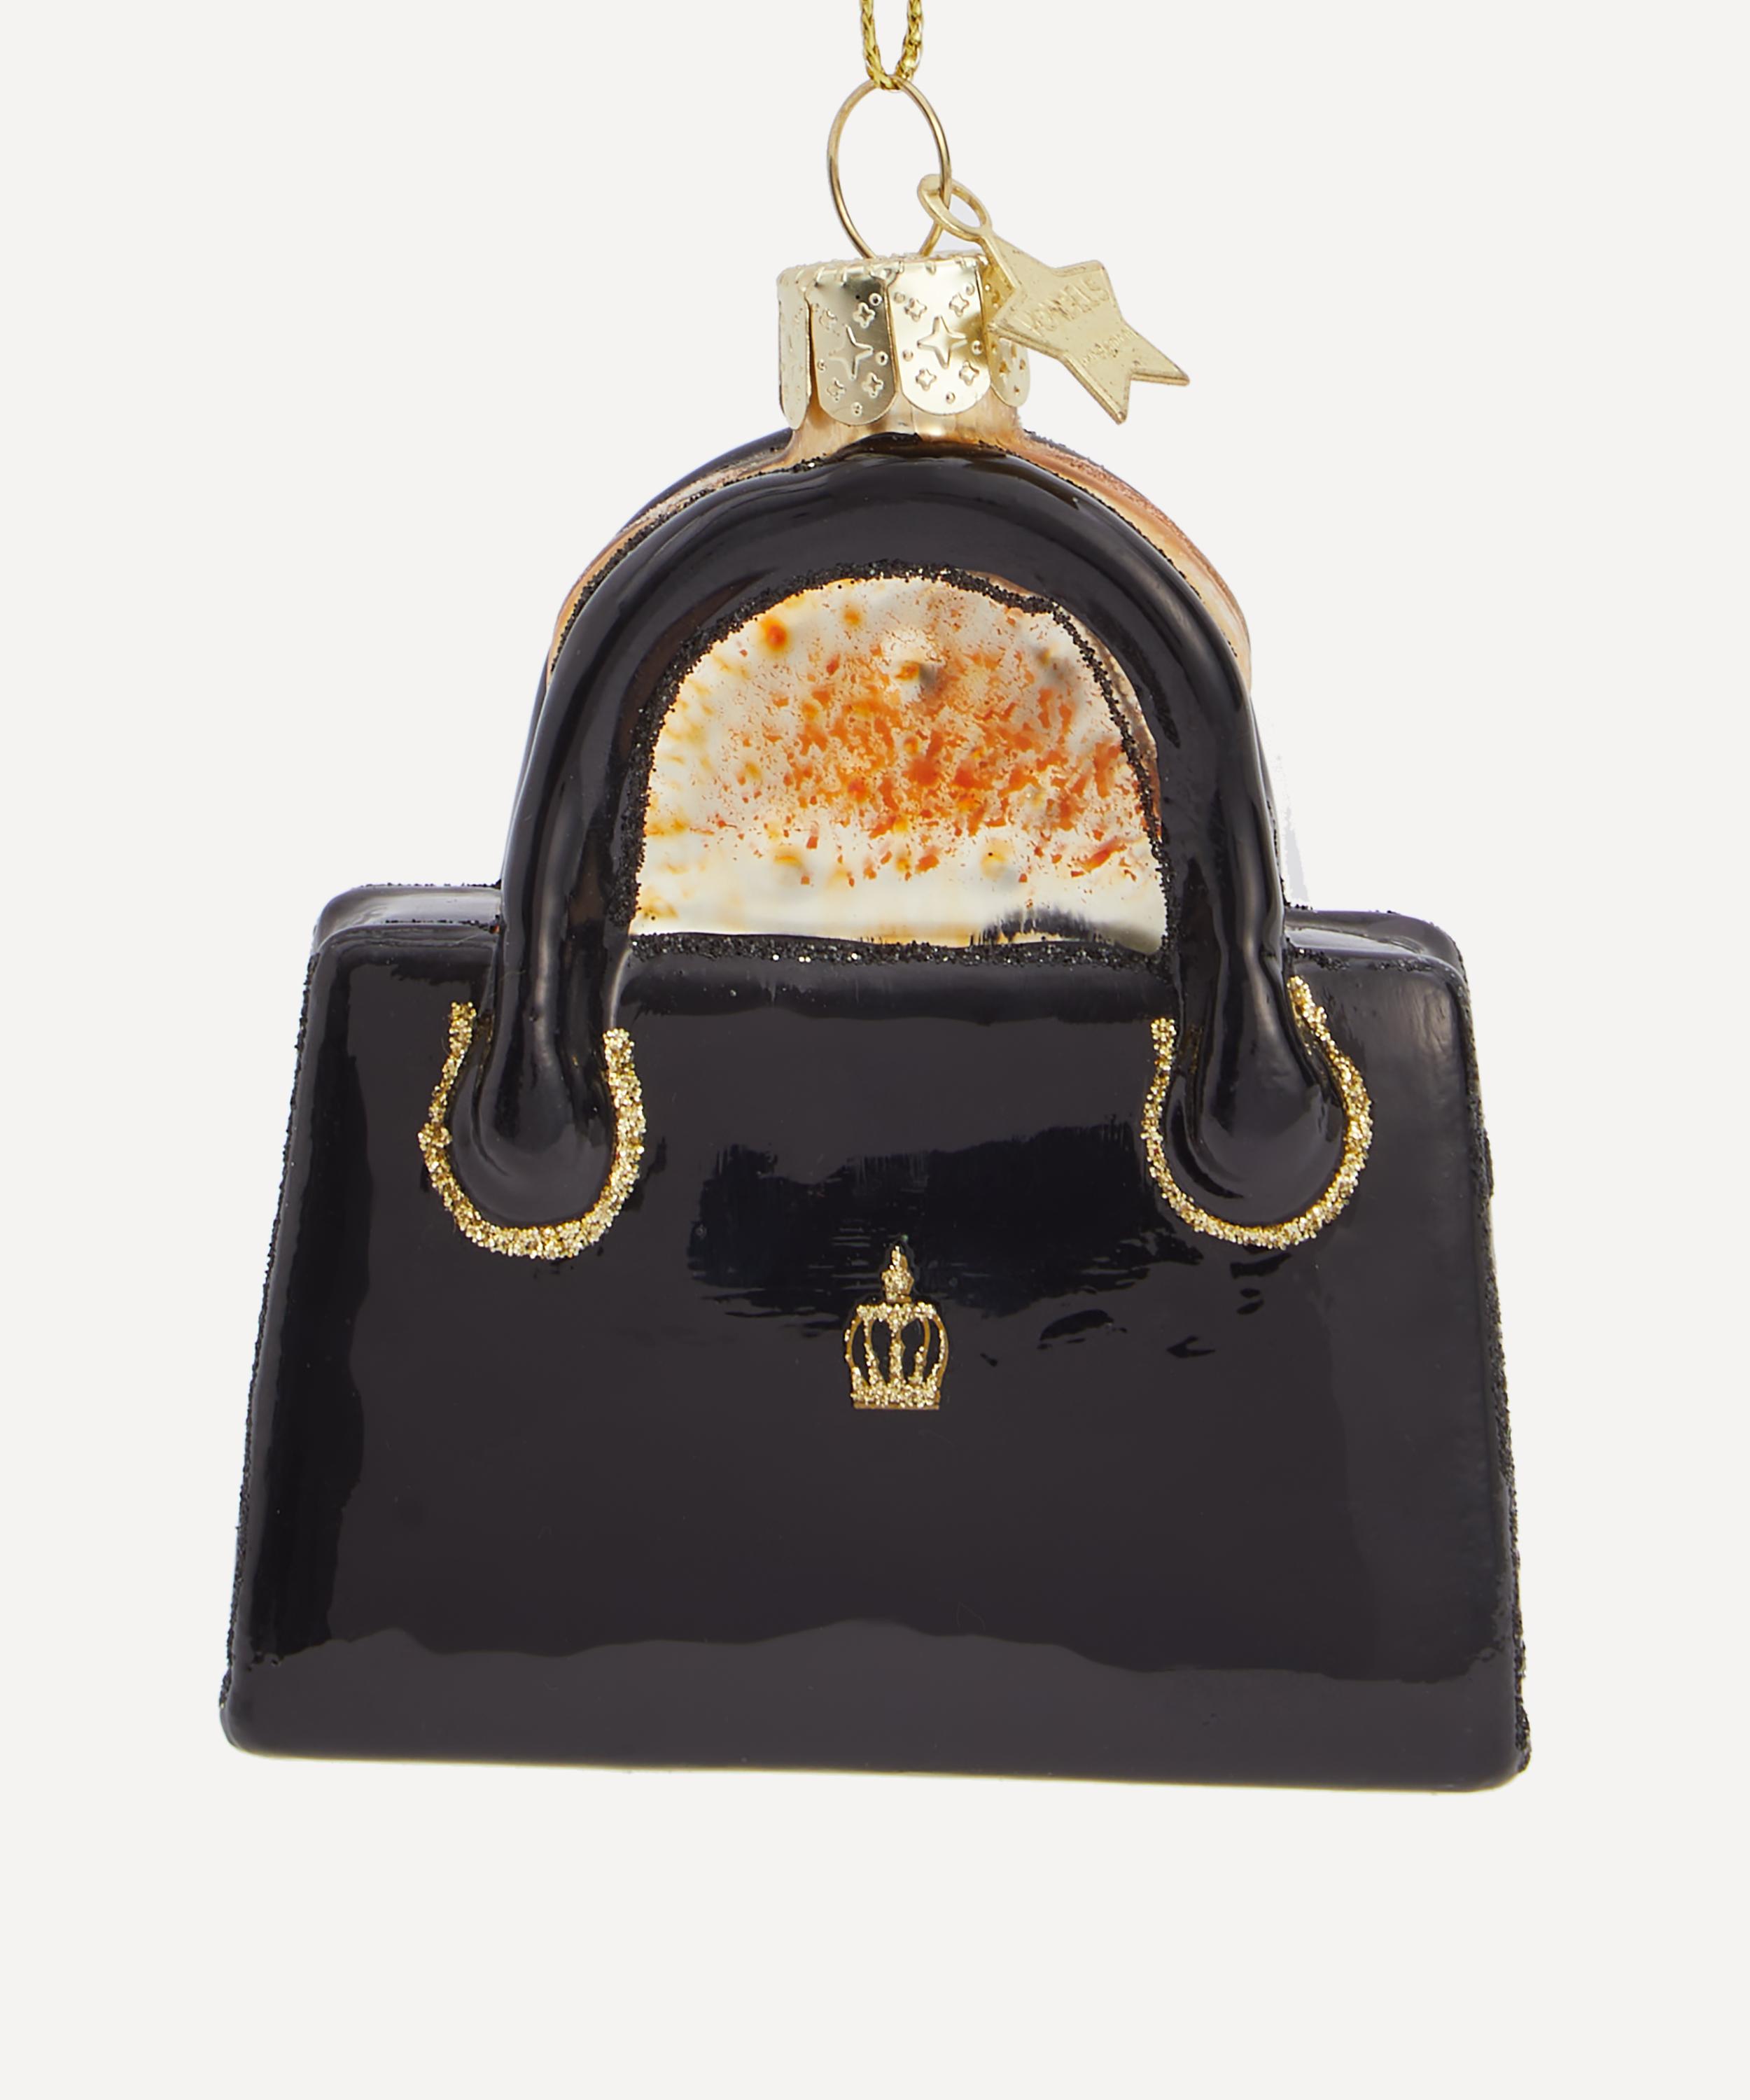 Christmas Handbag with Marmalade Sandwich Ornament